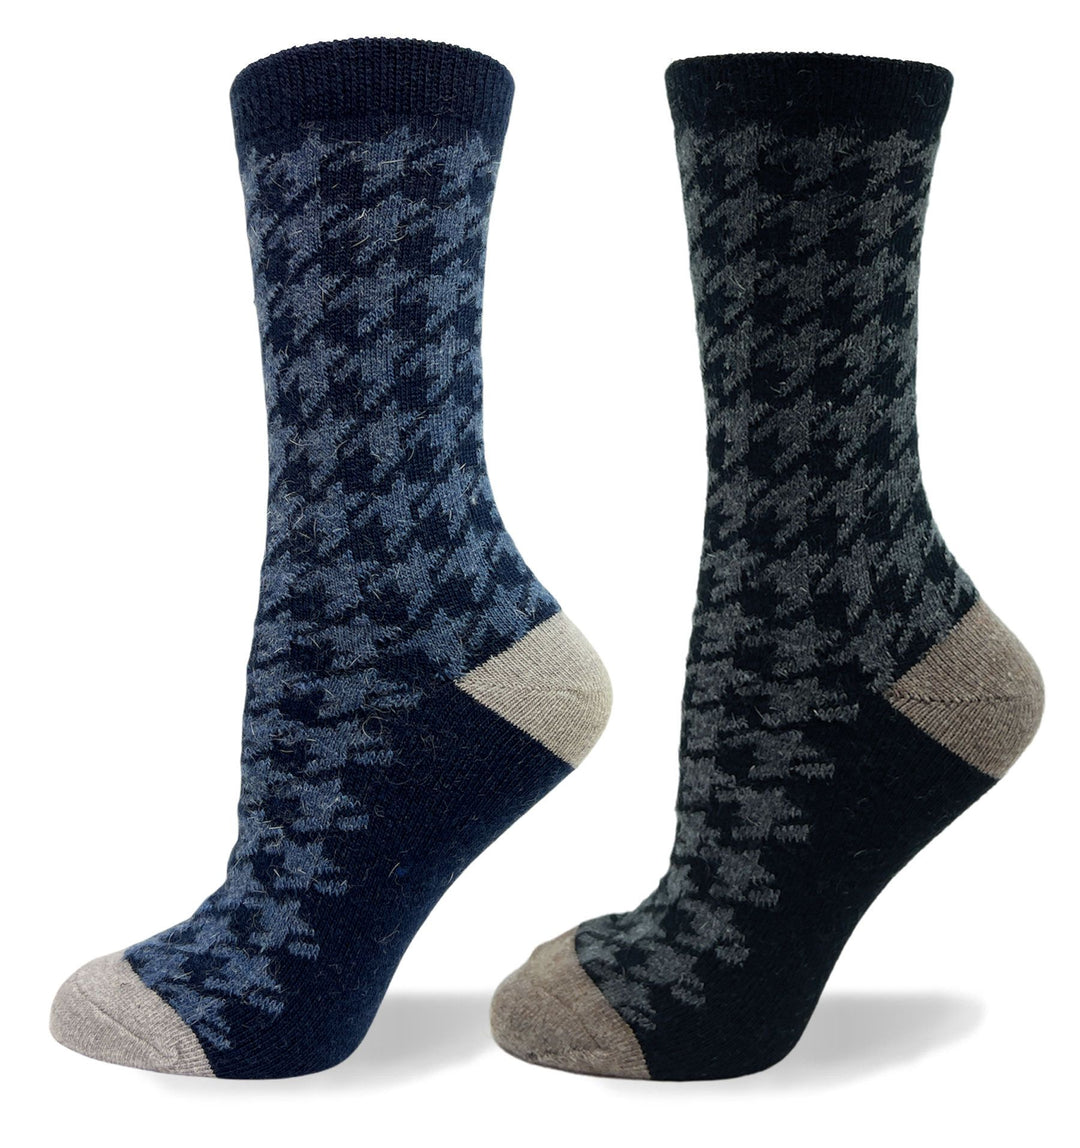 "Houndstooth" Dress Socks by Point Zero - Medium